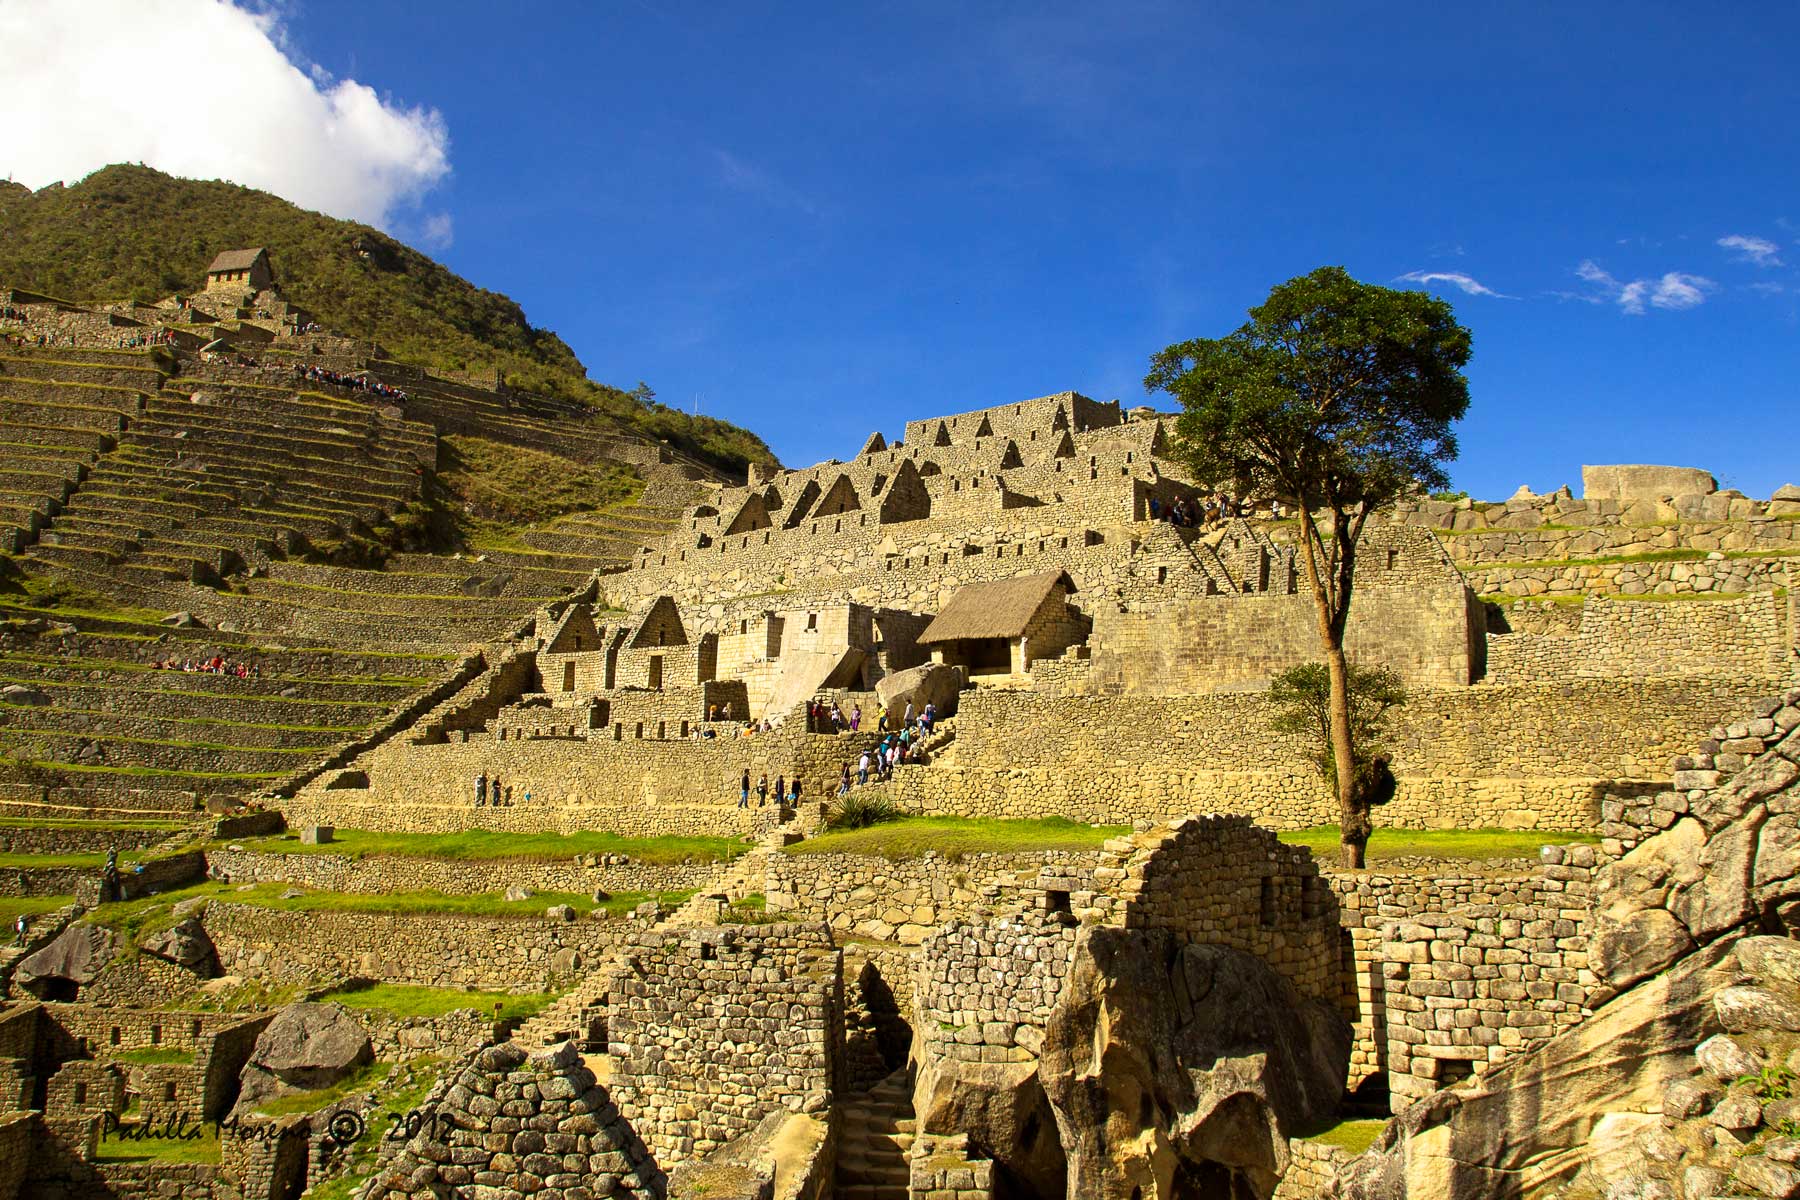 Esplanade of Machu Picchu, all the constructions can be appreciated